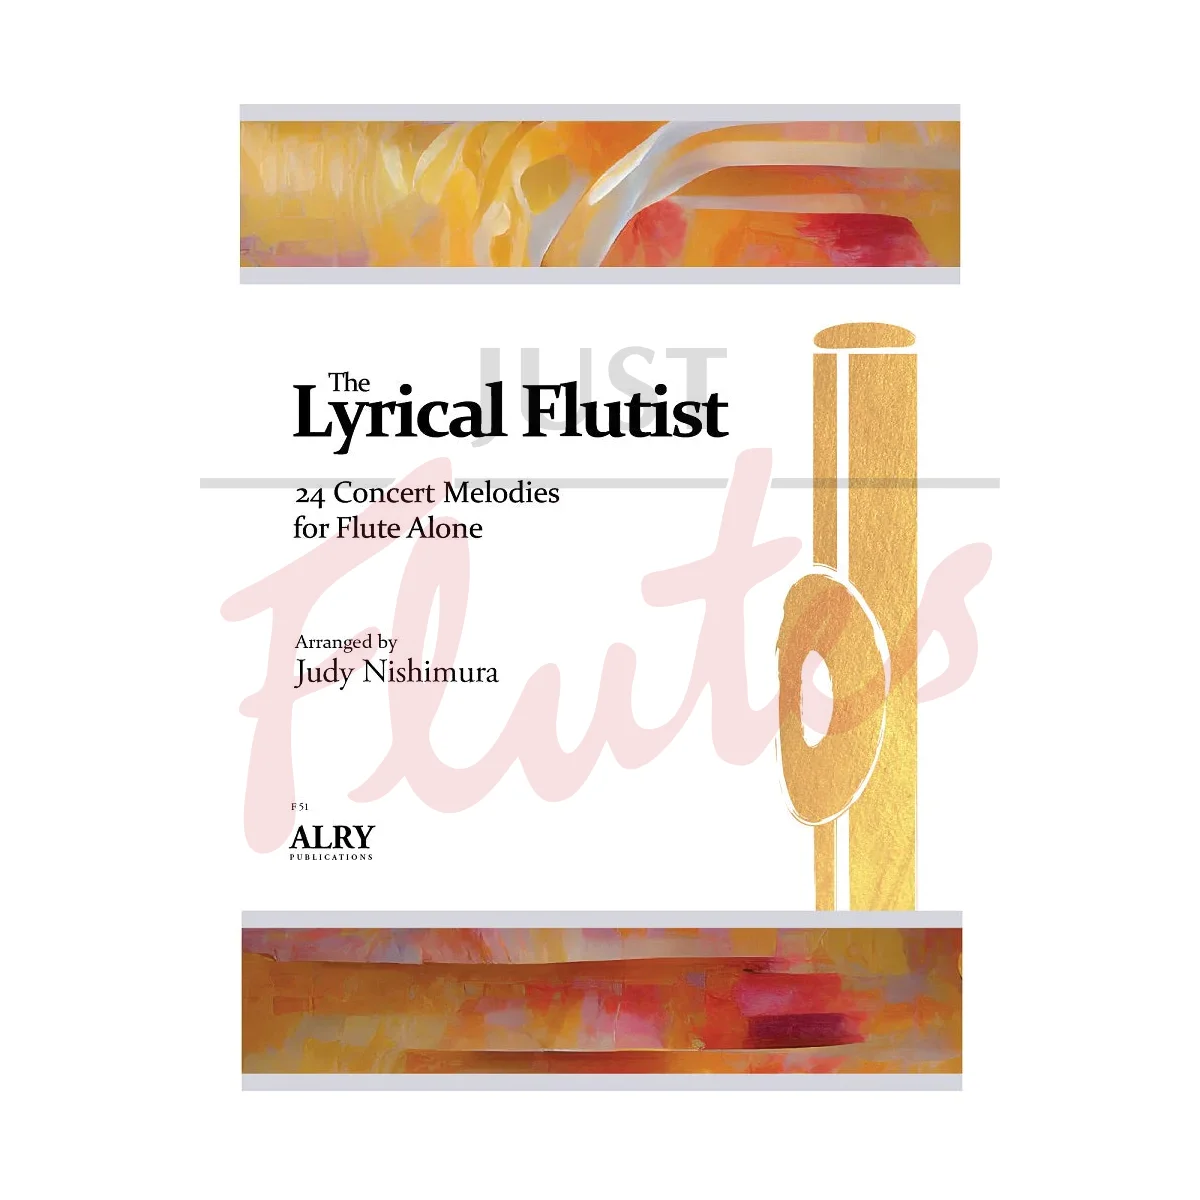 The Lyrical Flutist: 24 Concert Melodies for Flute Alone